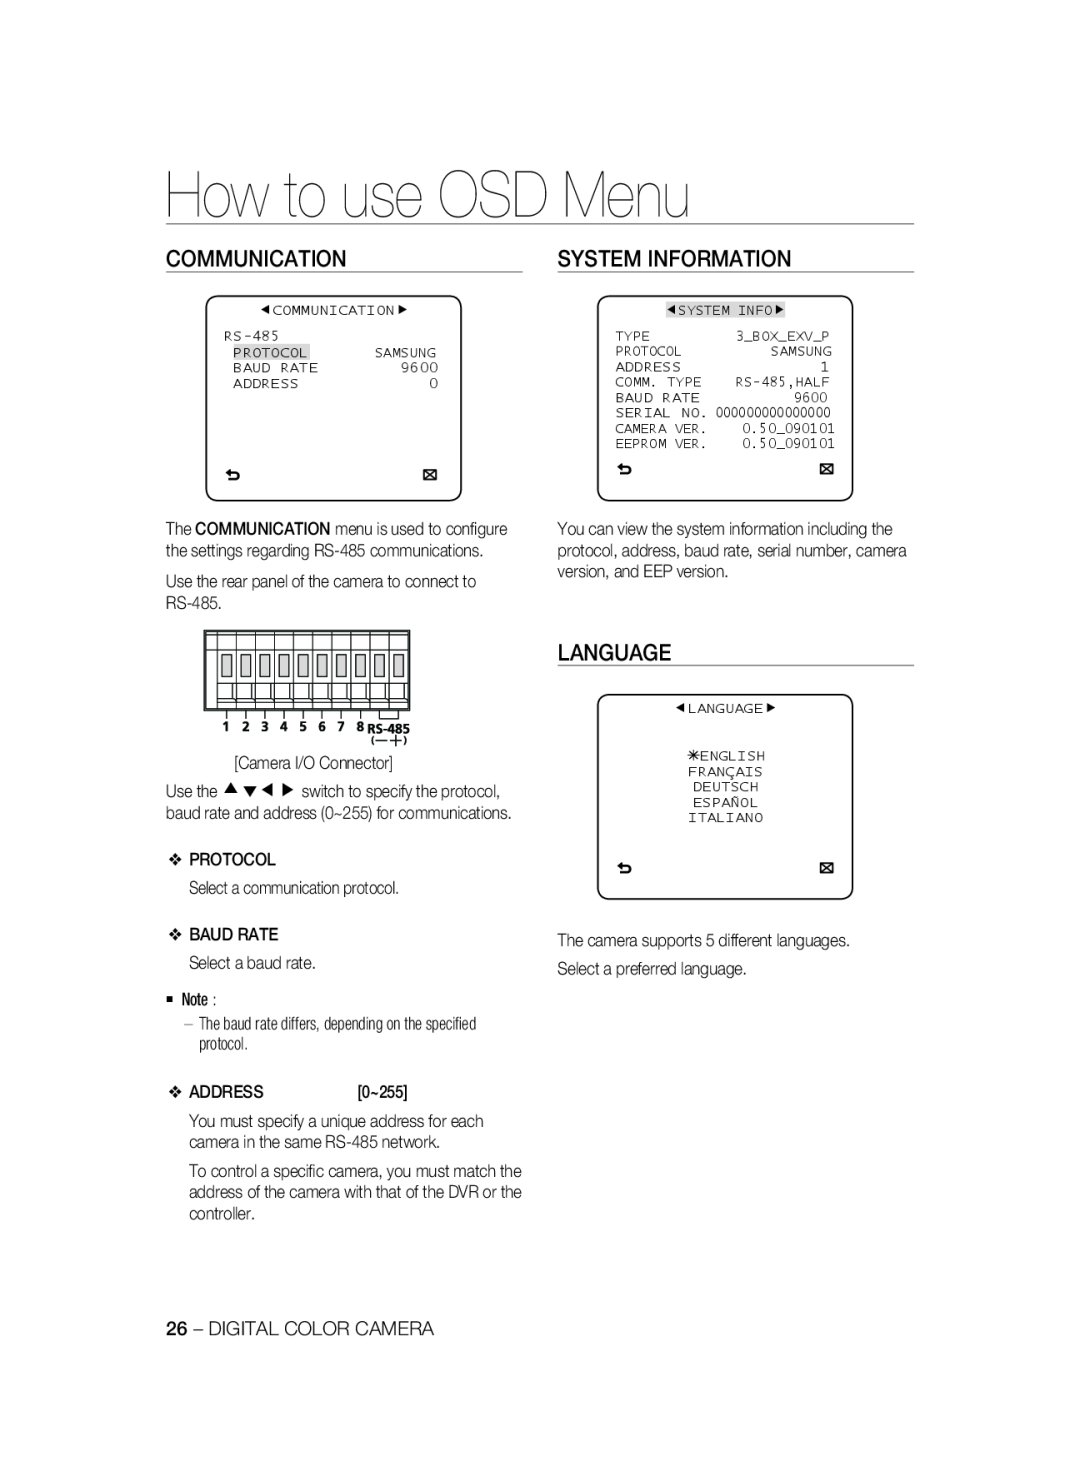 Samsung SCC-B2337P Communication, System Information, Language, How to use OSD Menu, Camera I/O Connector, Address, 0~255 